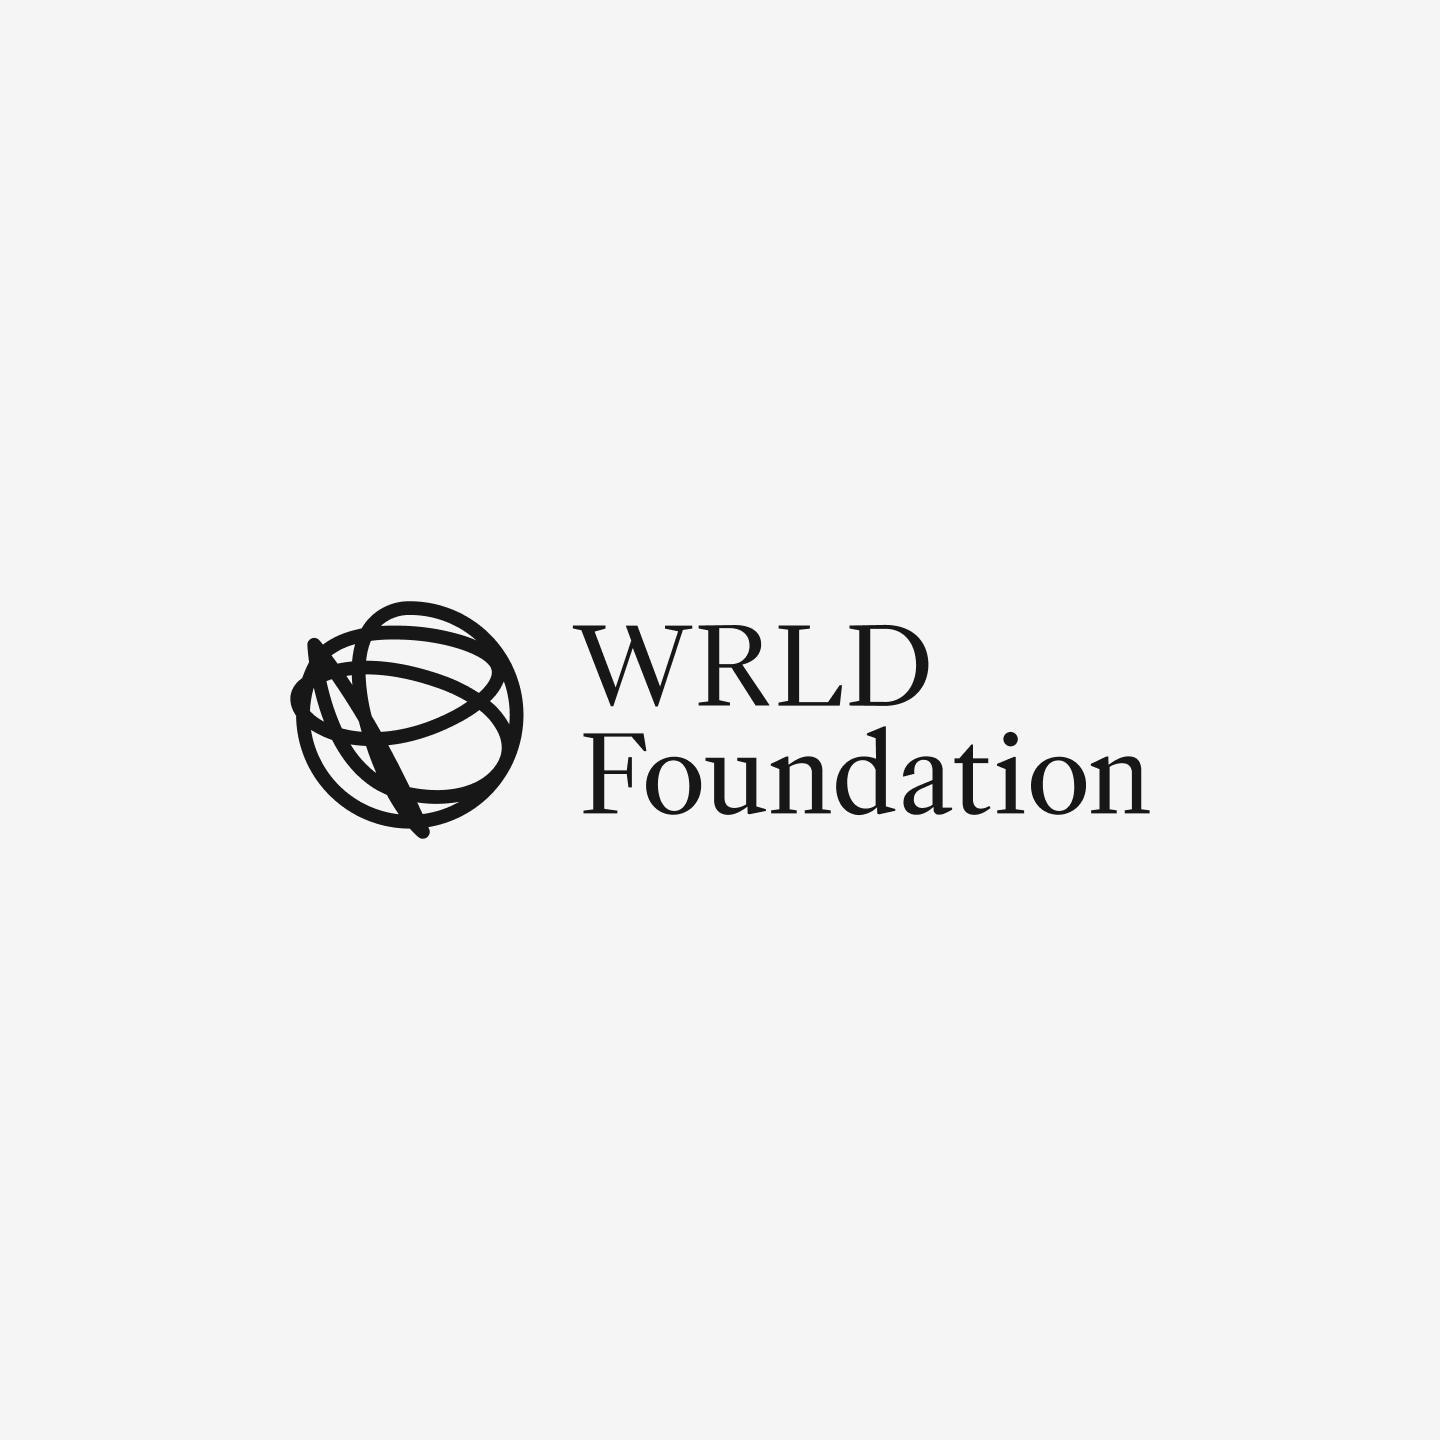 WRLD Foundation